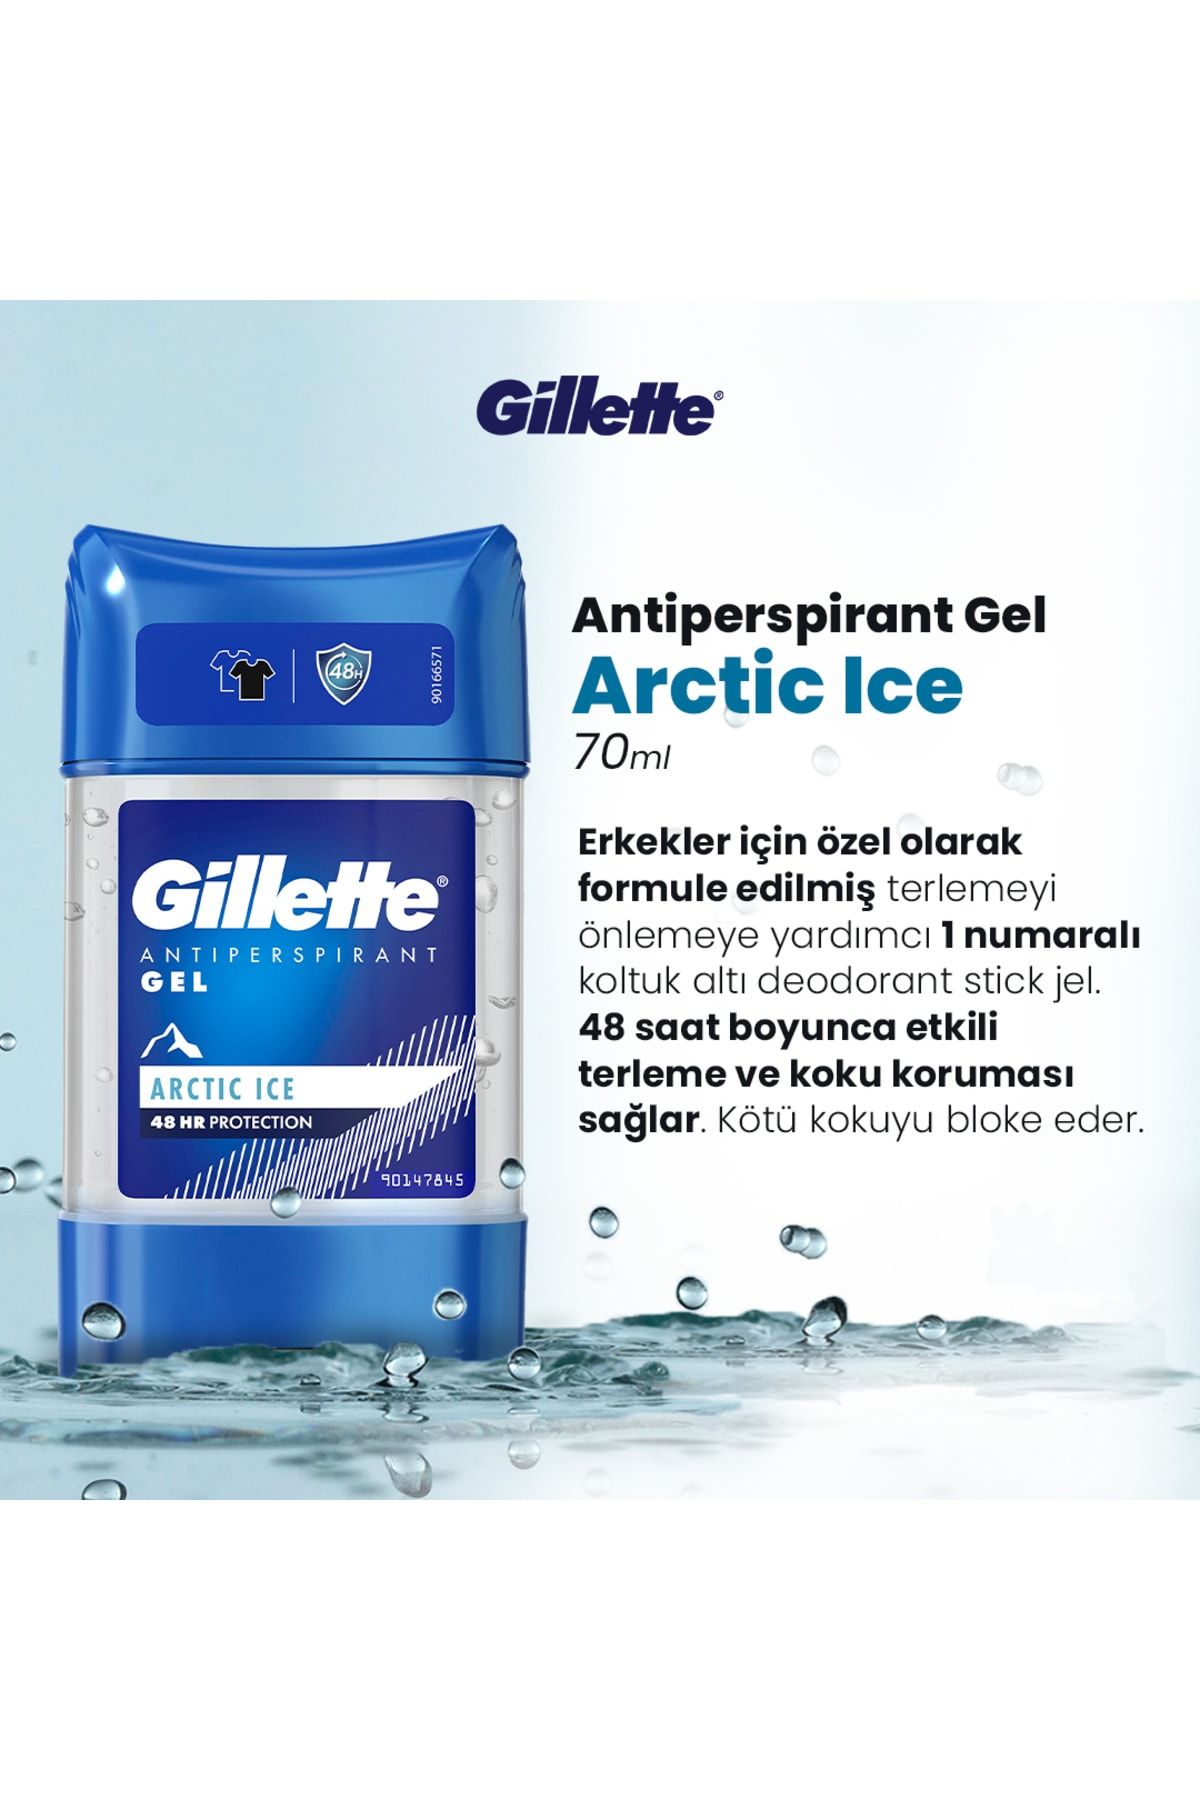 Gillette Antiperspirant Gel Arctic Ice 70 ml